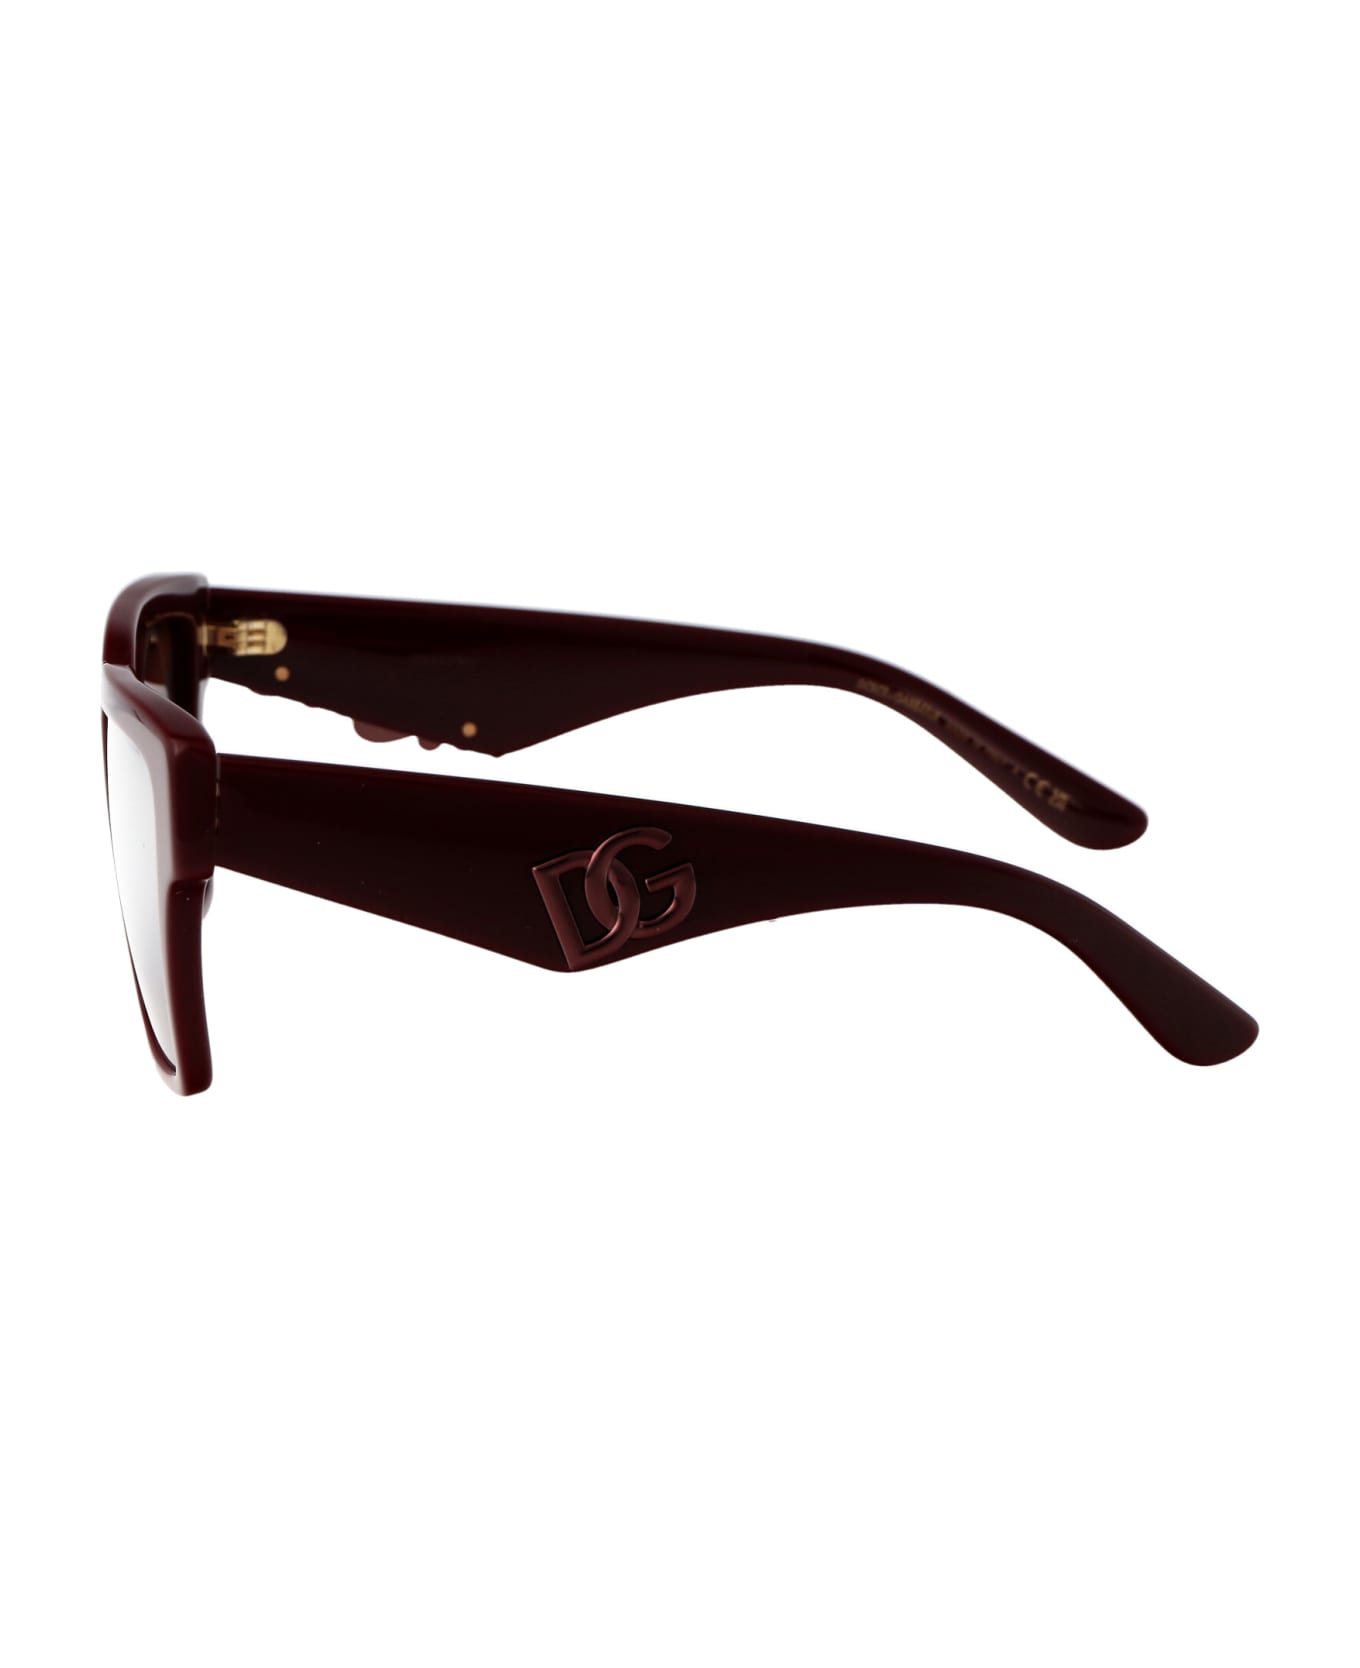 Duple tinted sunglasses Eyewear 0dg4436 Sunglasses - 30917E Bordeuax